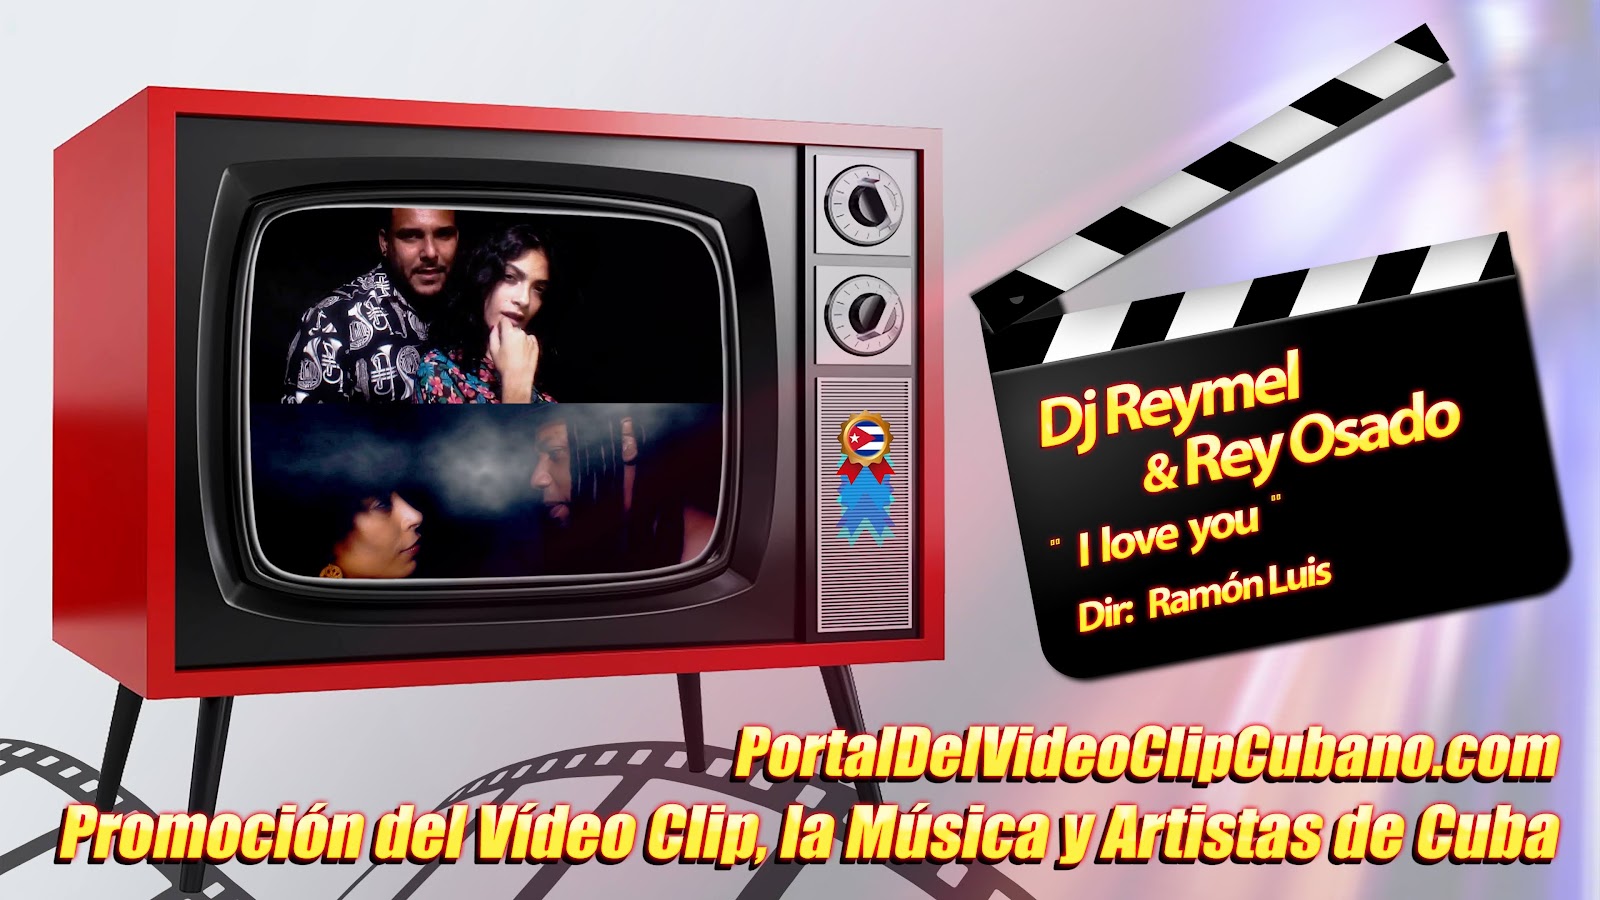 Dj Reymel & Rey Osado - ¨I love you¨ - Director: Ramón Luis. Portal Del Vídeo Clip Cubano. Música Electrónica Cubana. CUBA.